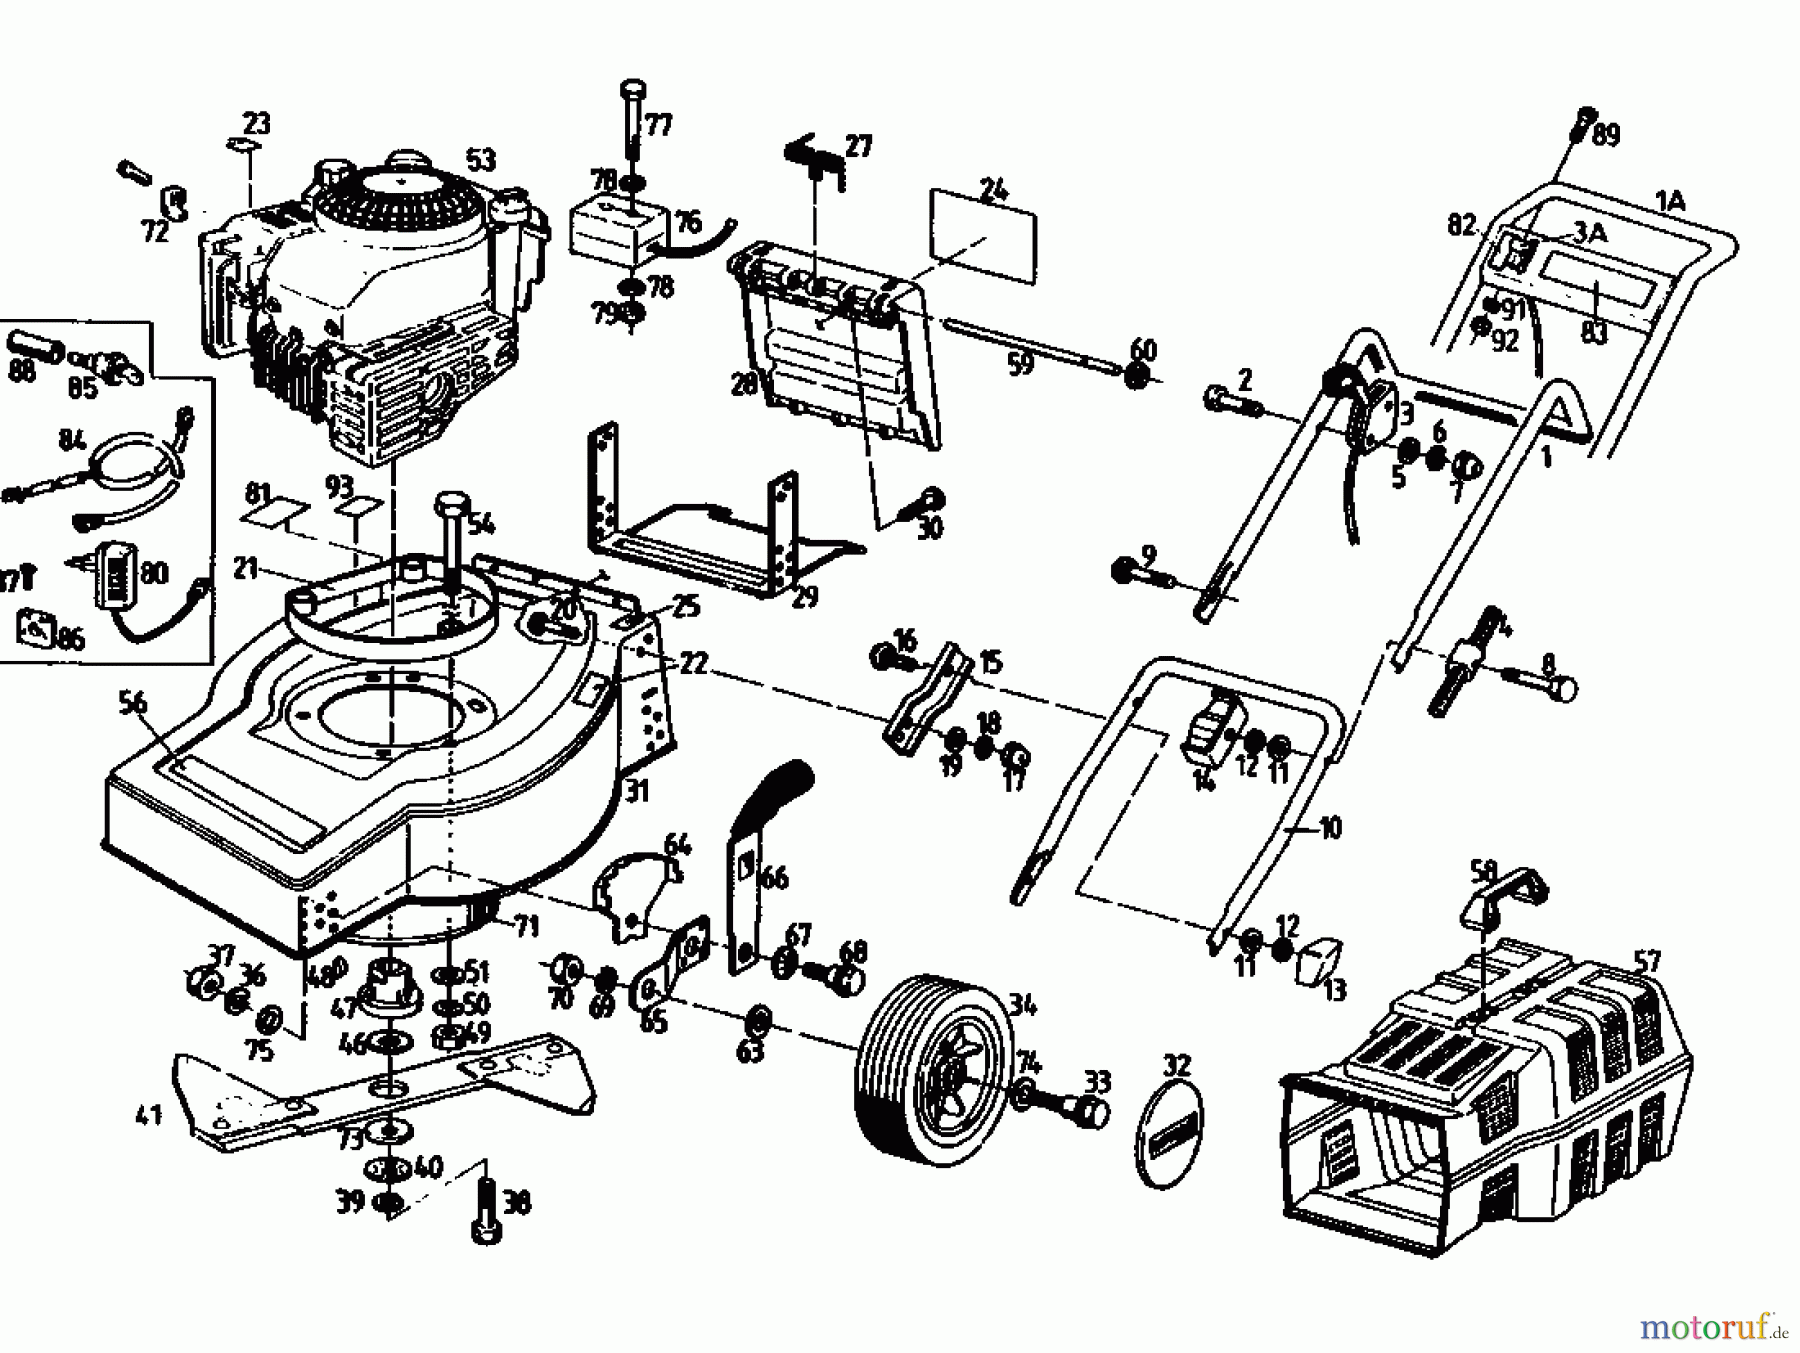  Gutbrod Petrol mower TURBO HBSE 02893.07  (1993) Basic machine